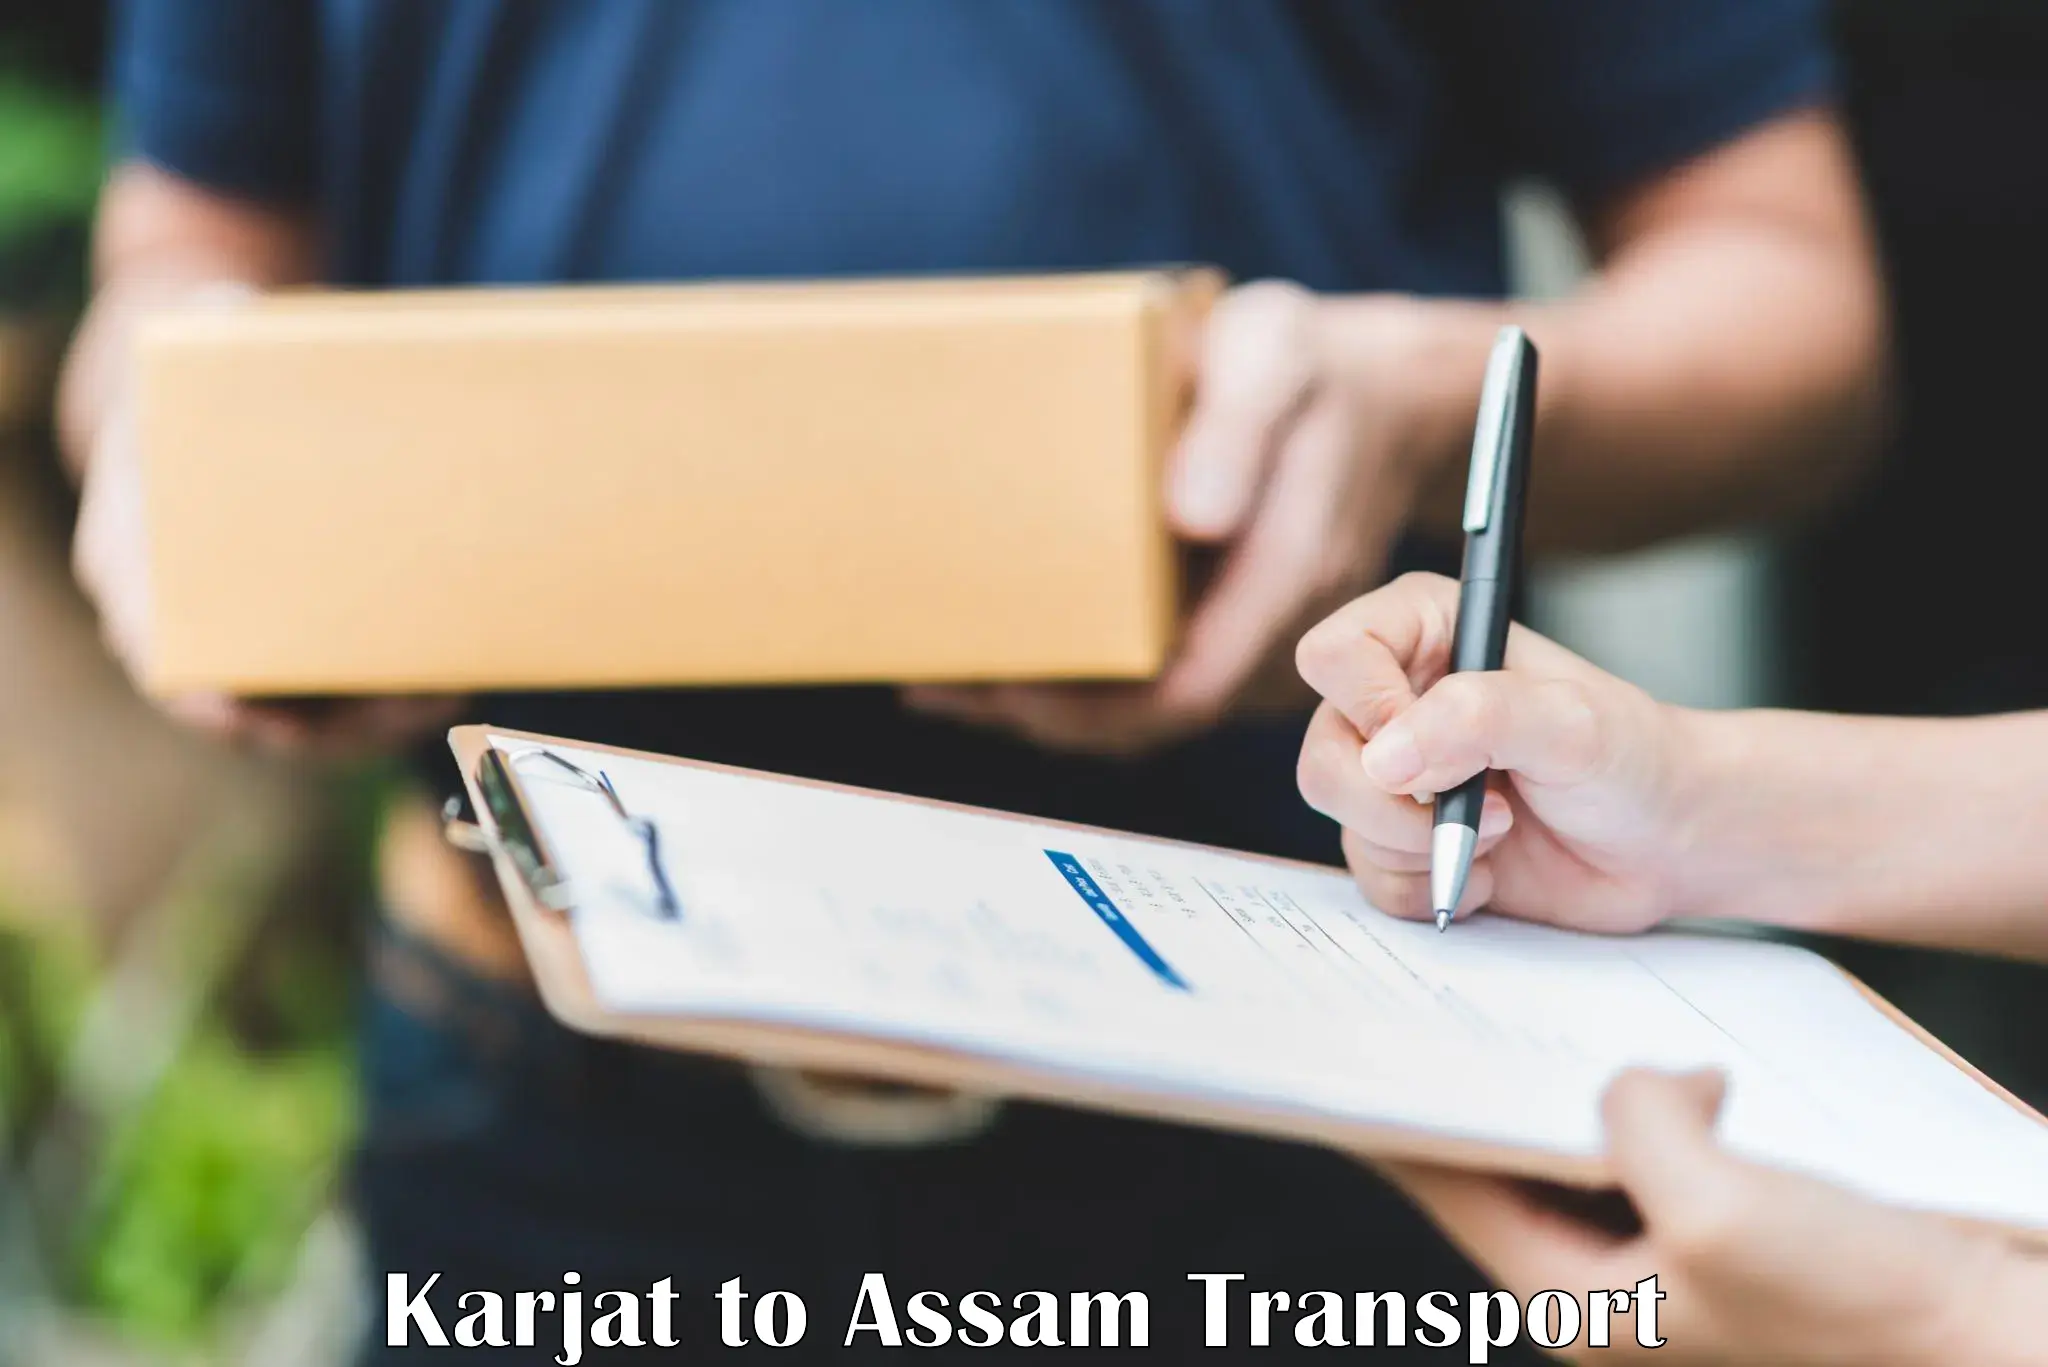 Delivery service Karjat to Dibrugarh